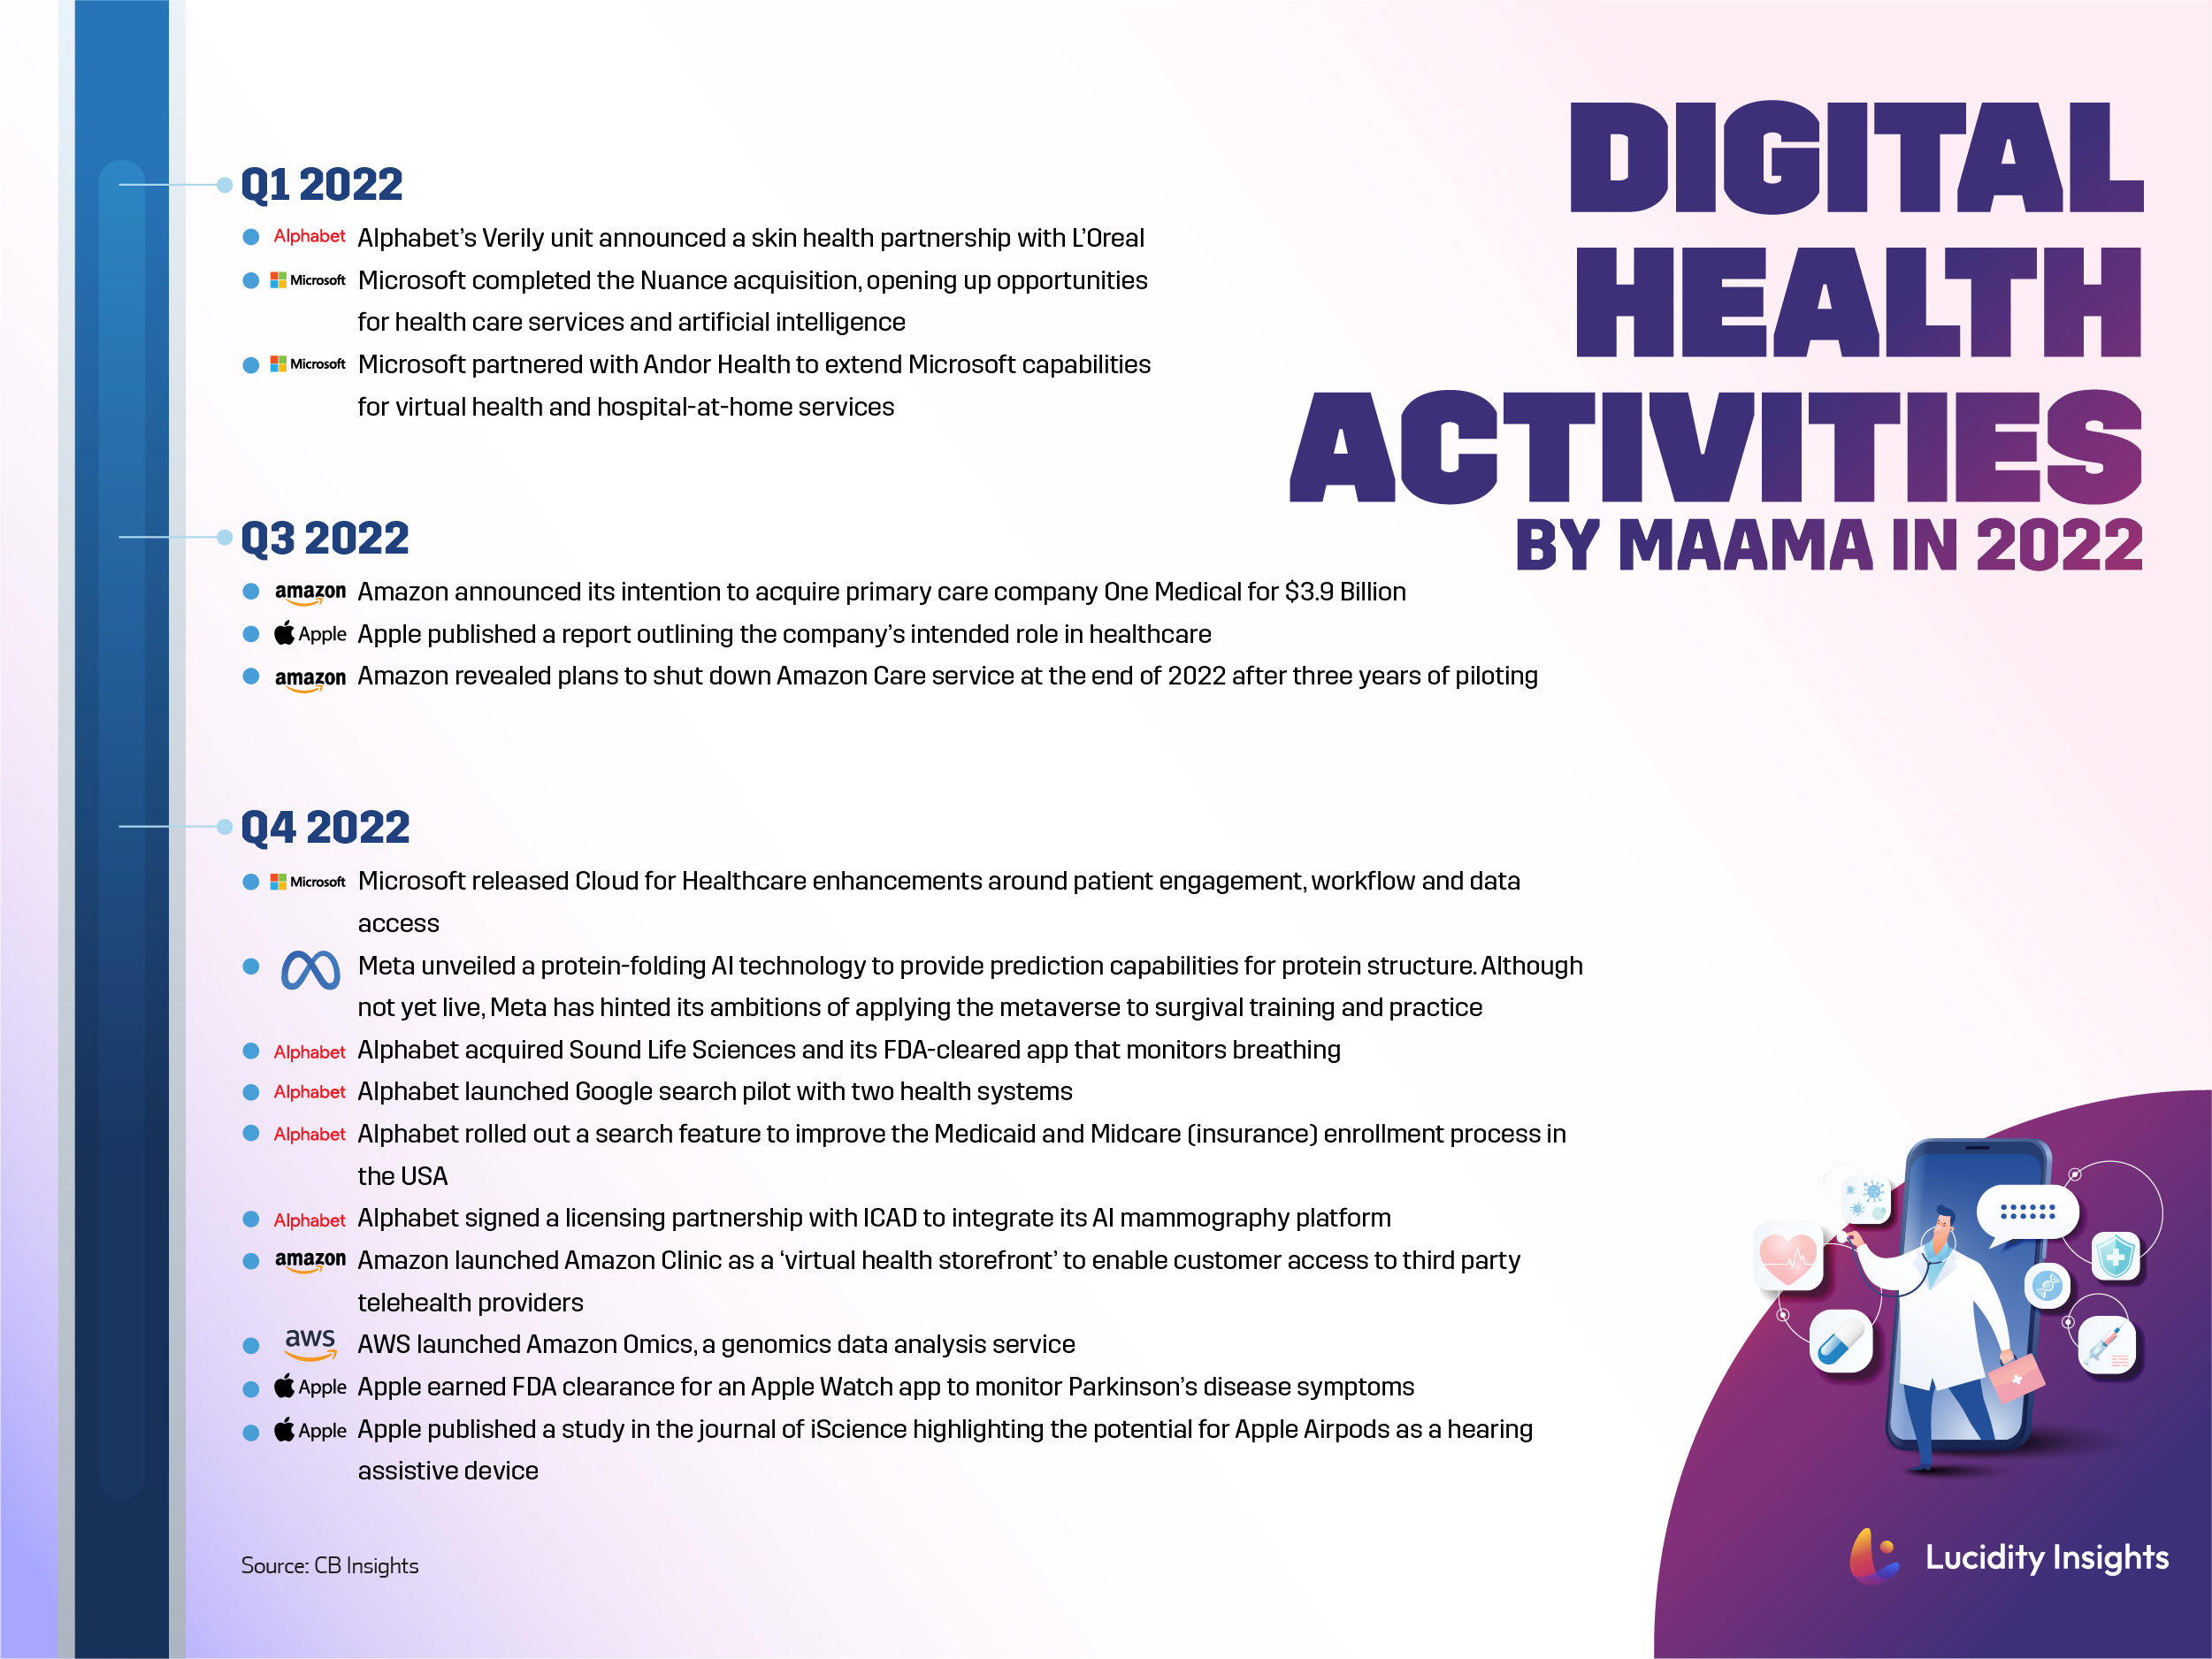 Digital Health Activities by MAAMA in 2022